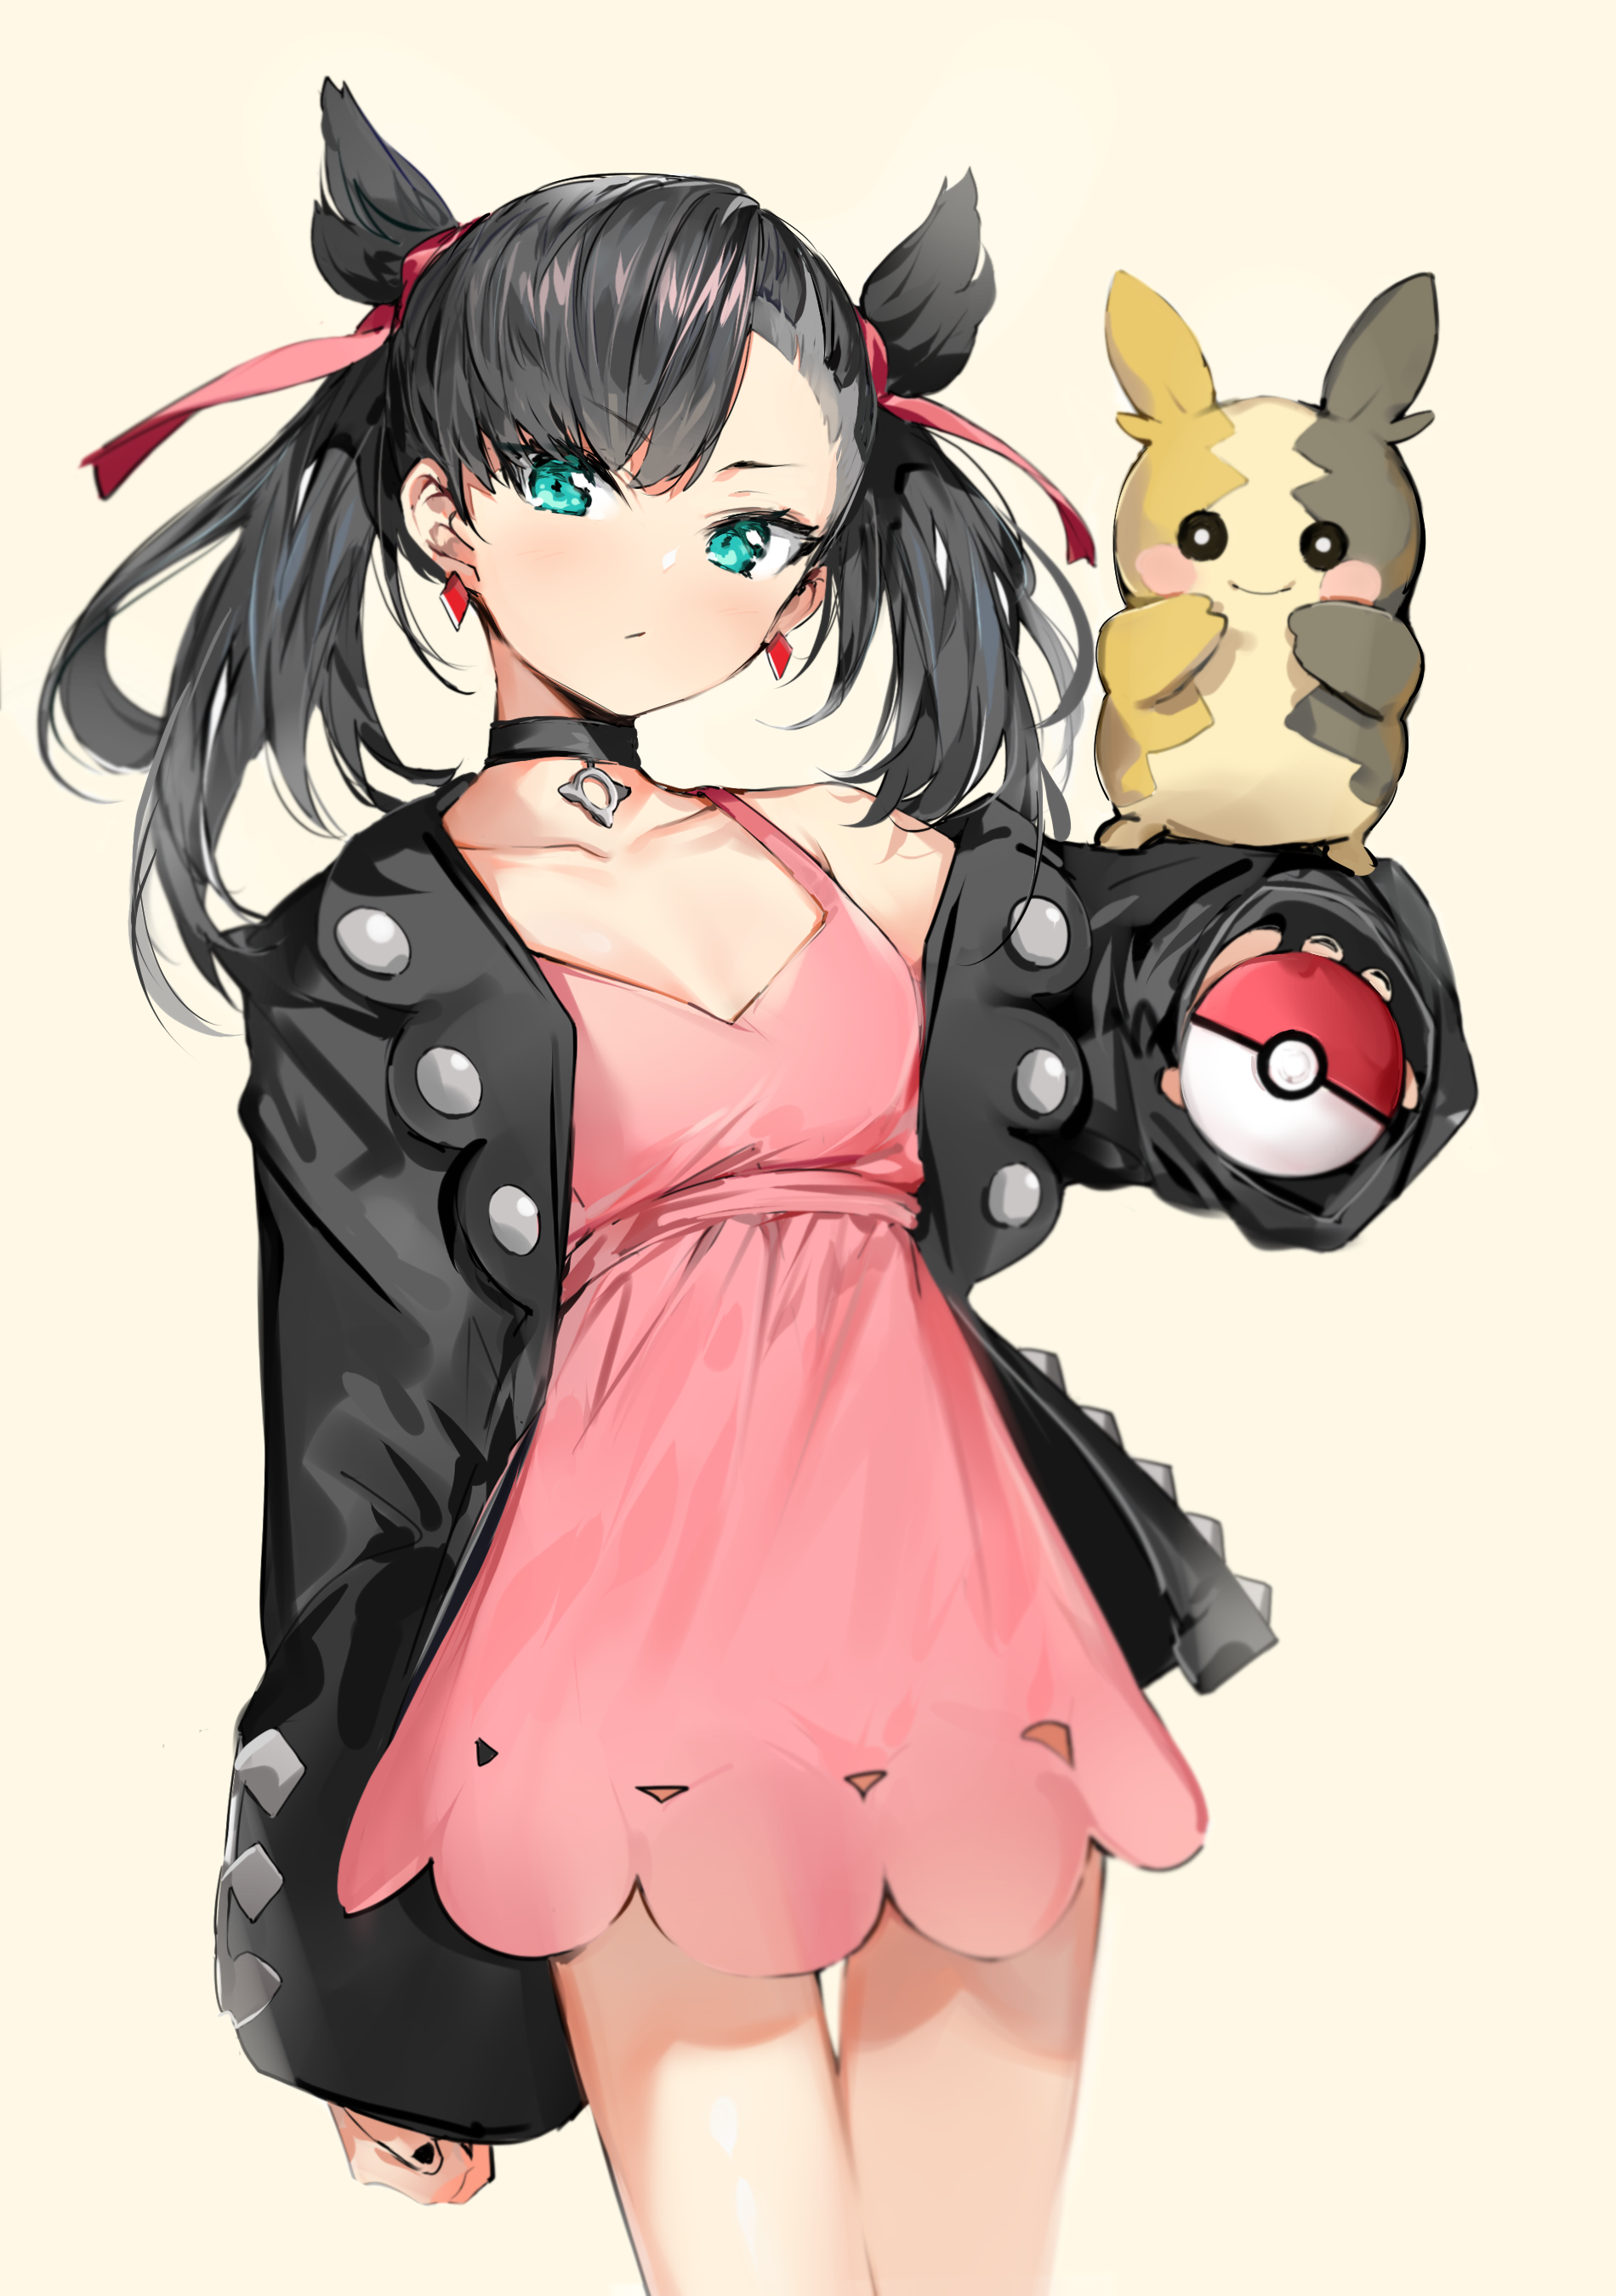 Anime 1900x2700 anime anime girls digital art artwork 2D portrait display Pokémon Marnie (Pokemon) dark hair aqua eyes open jacket dress Silver (artist)